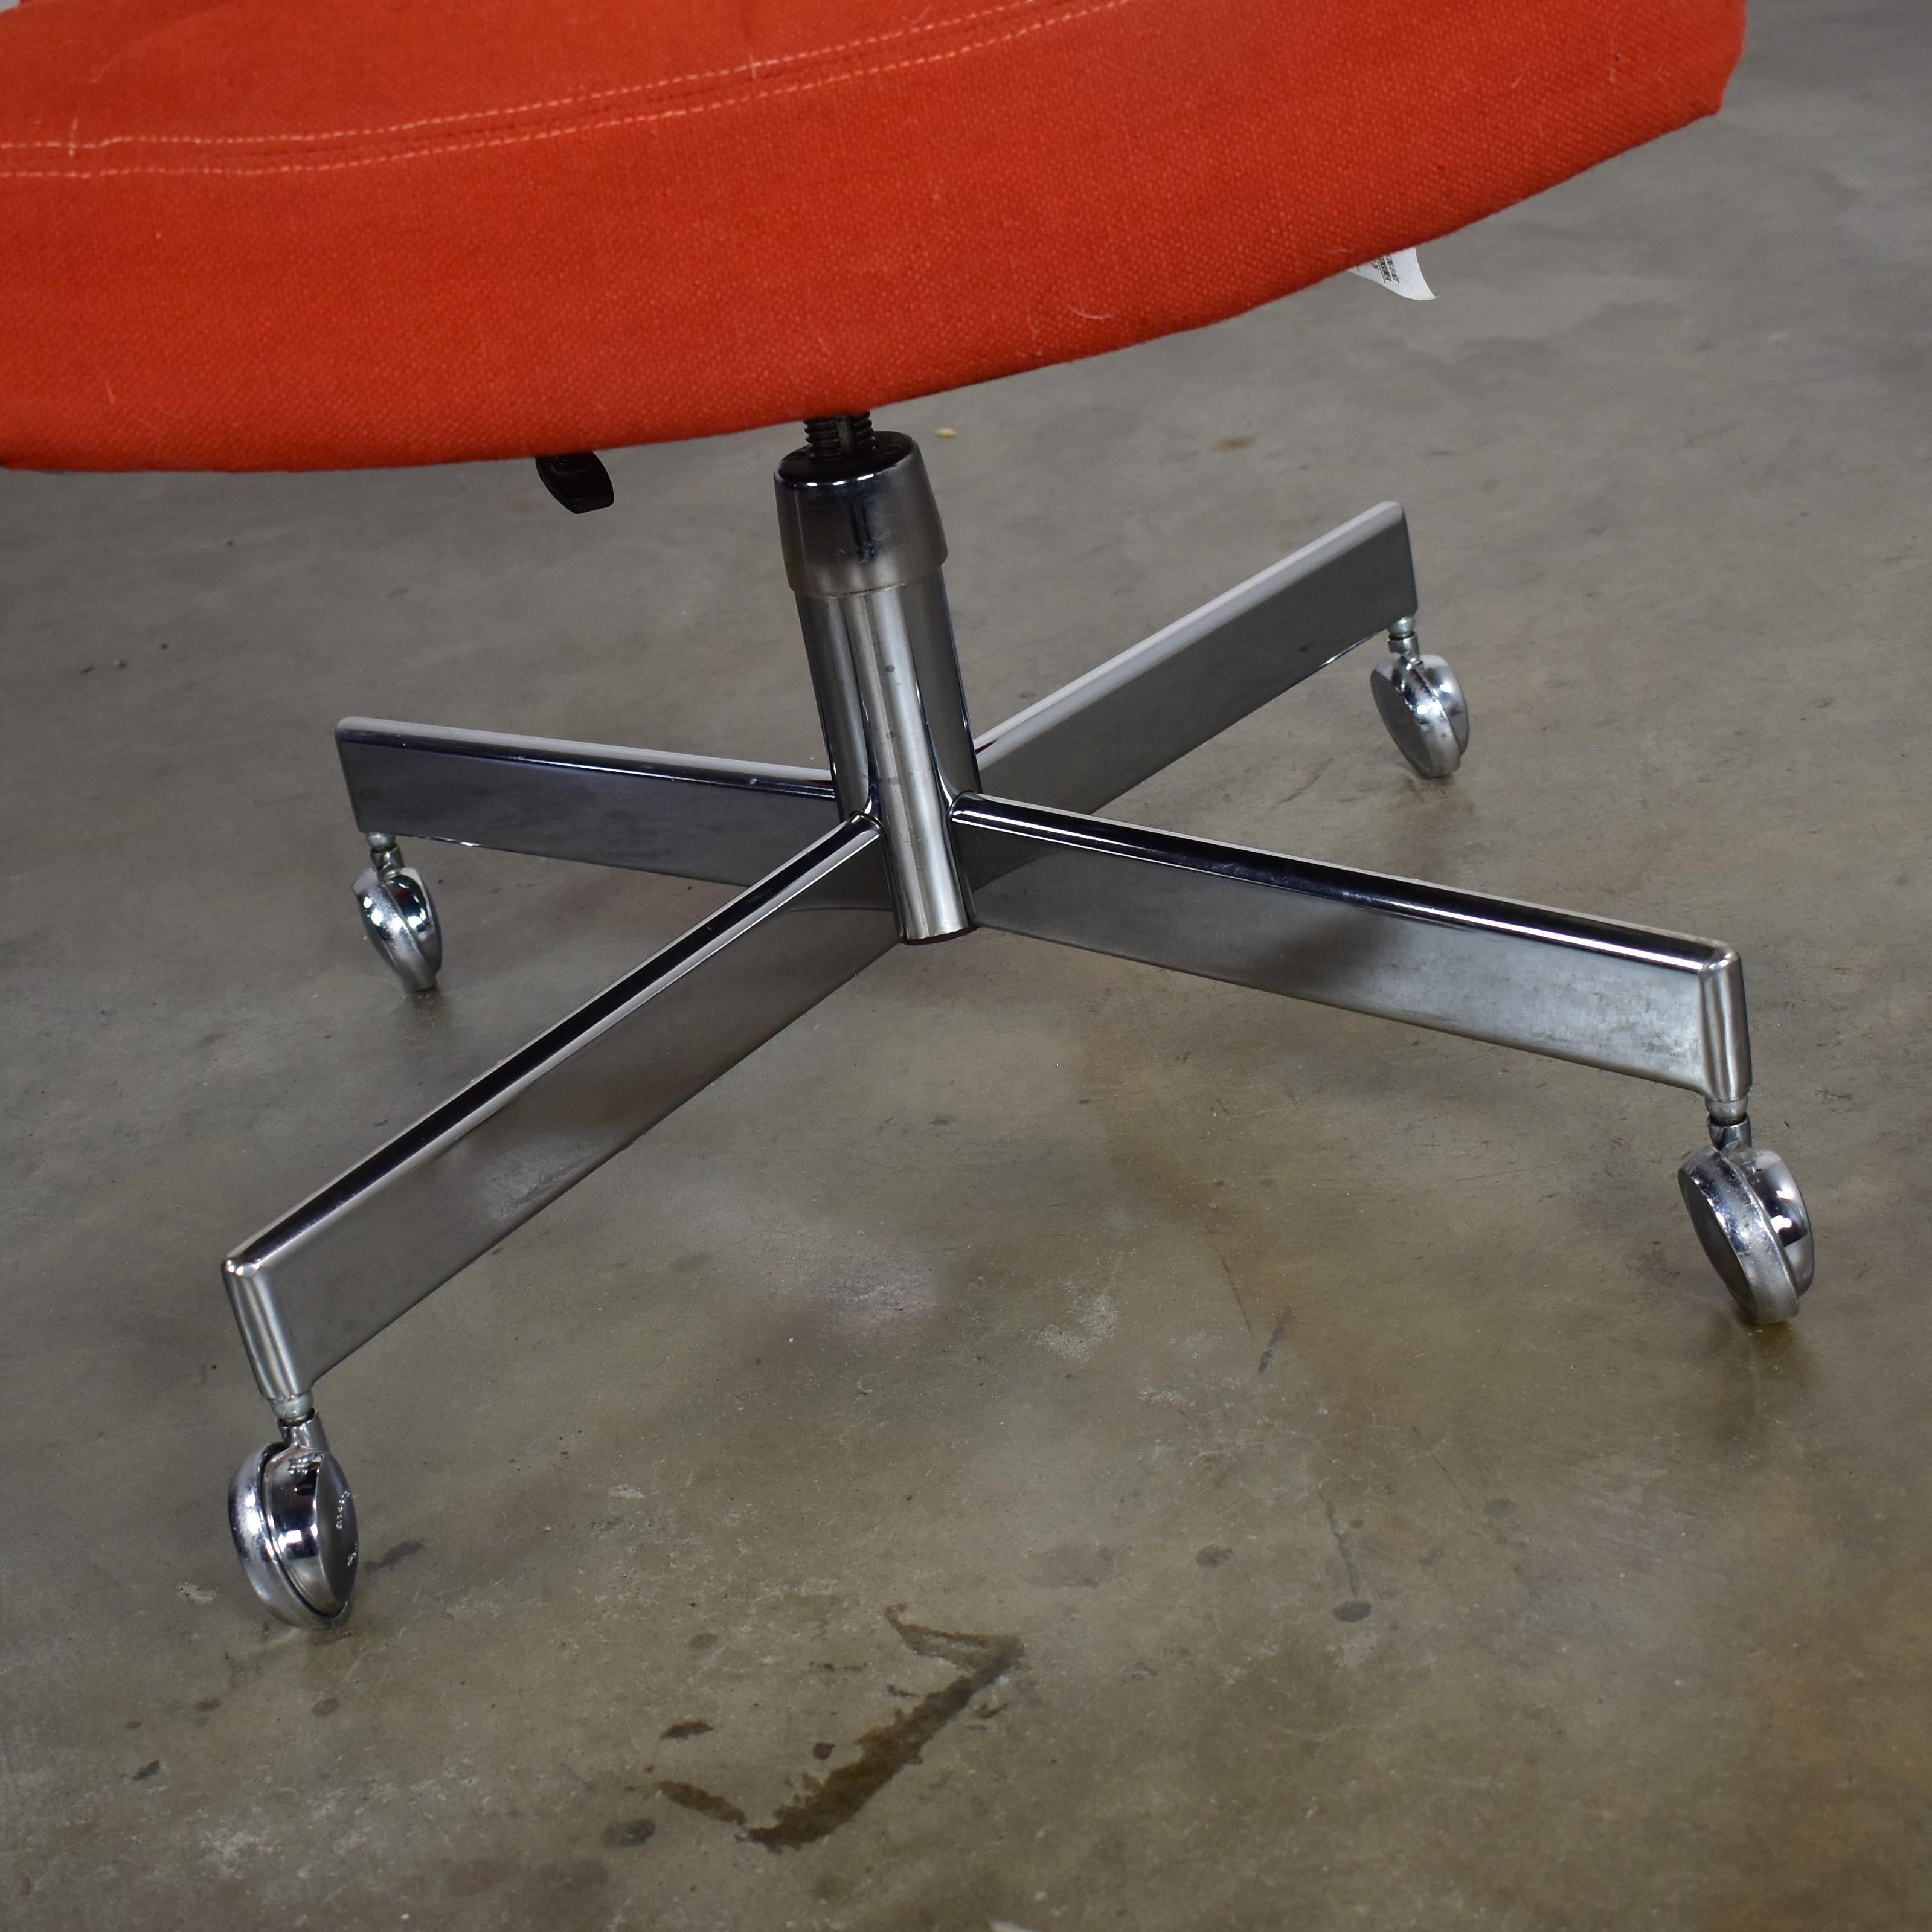 Chromcraft Adjustable Armed High Back Rolling Office Chair Orange Hopsack Fabric 5